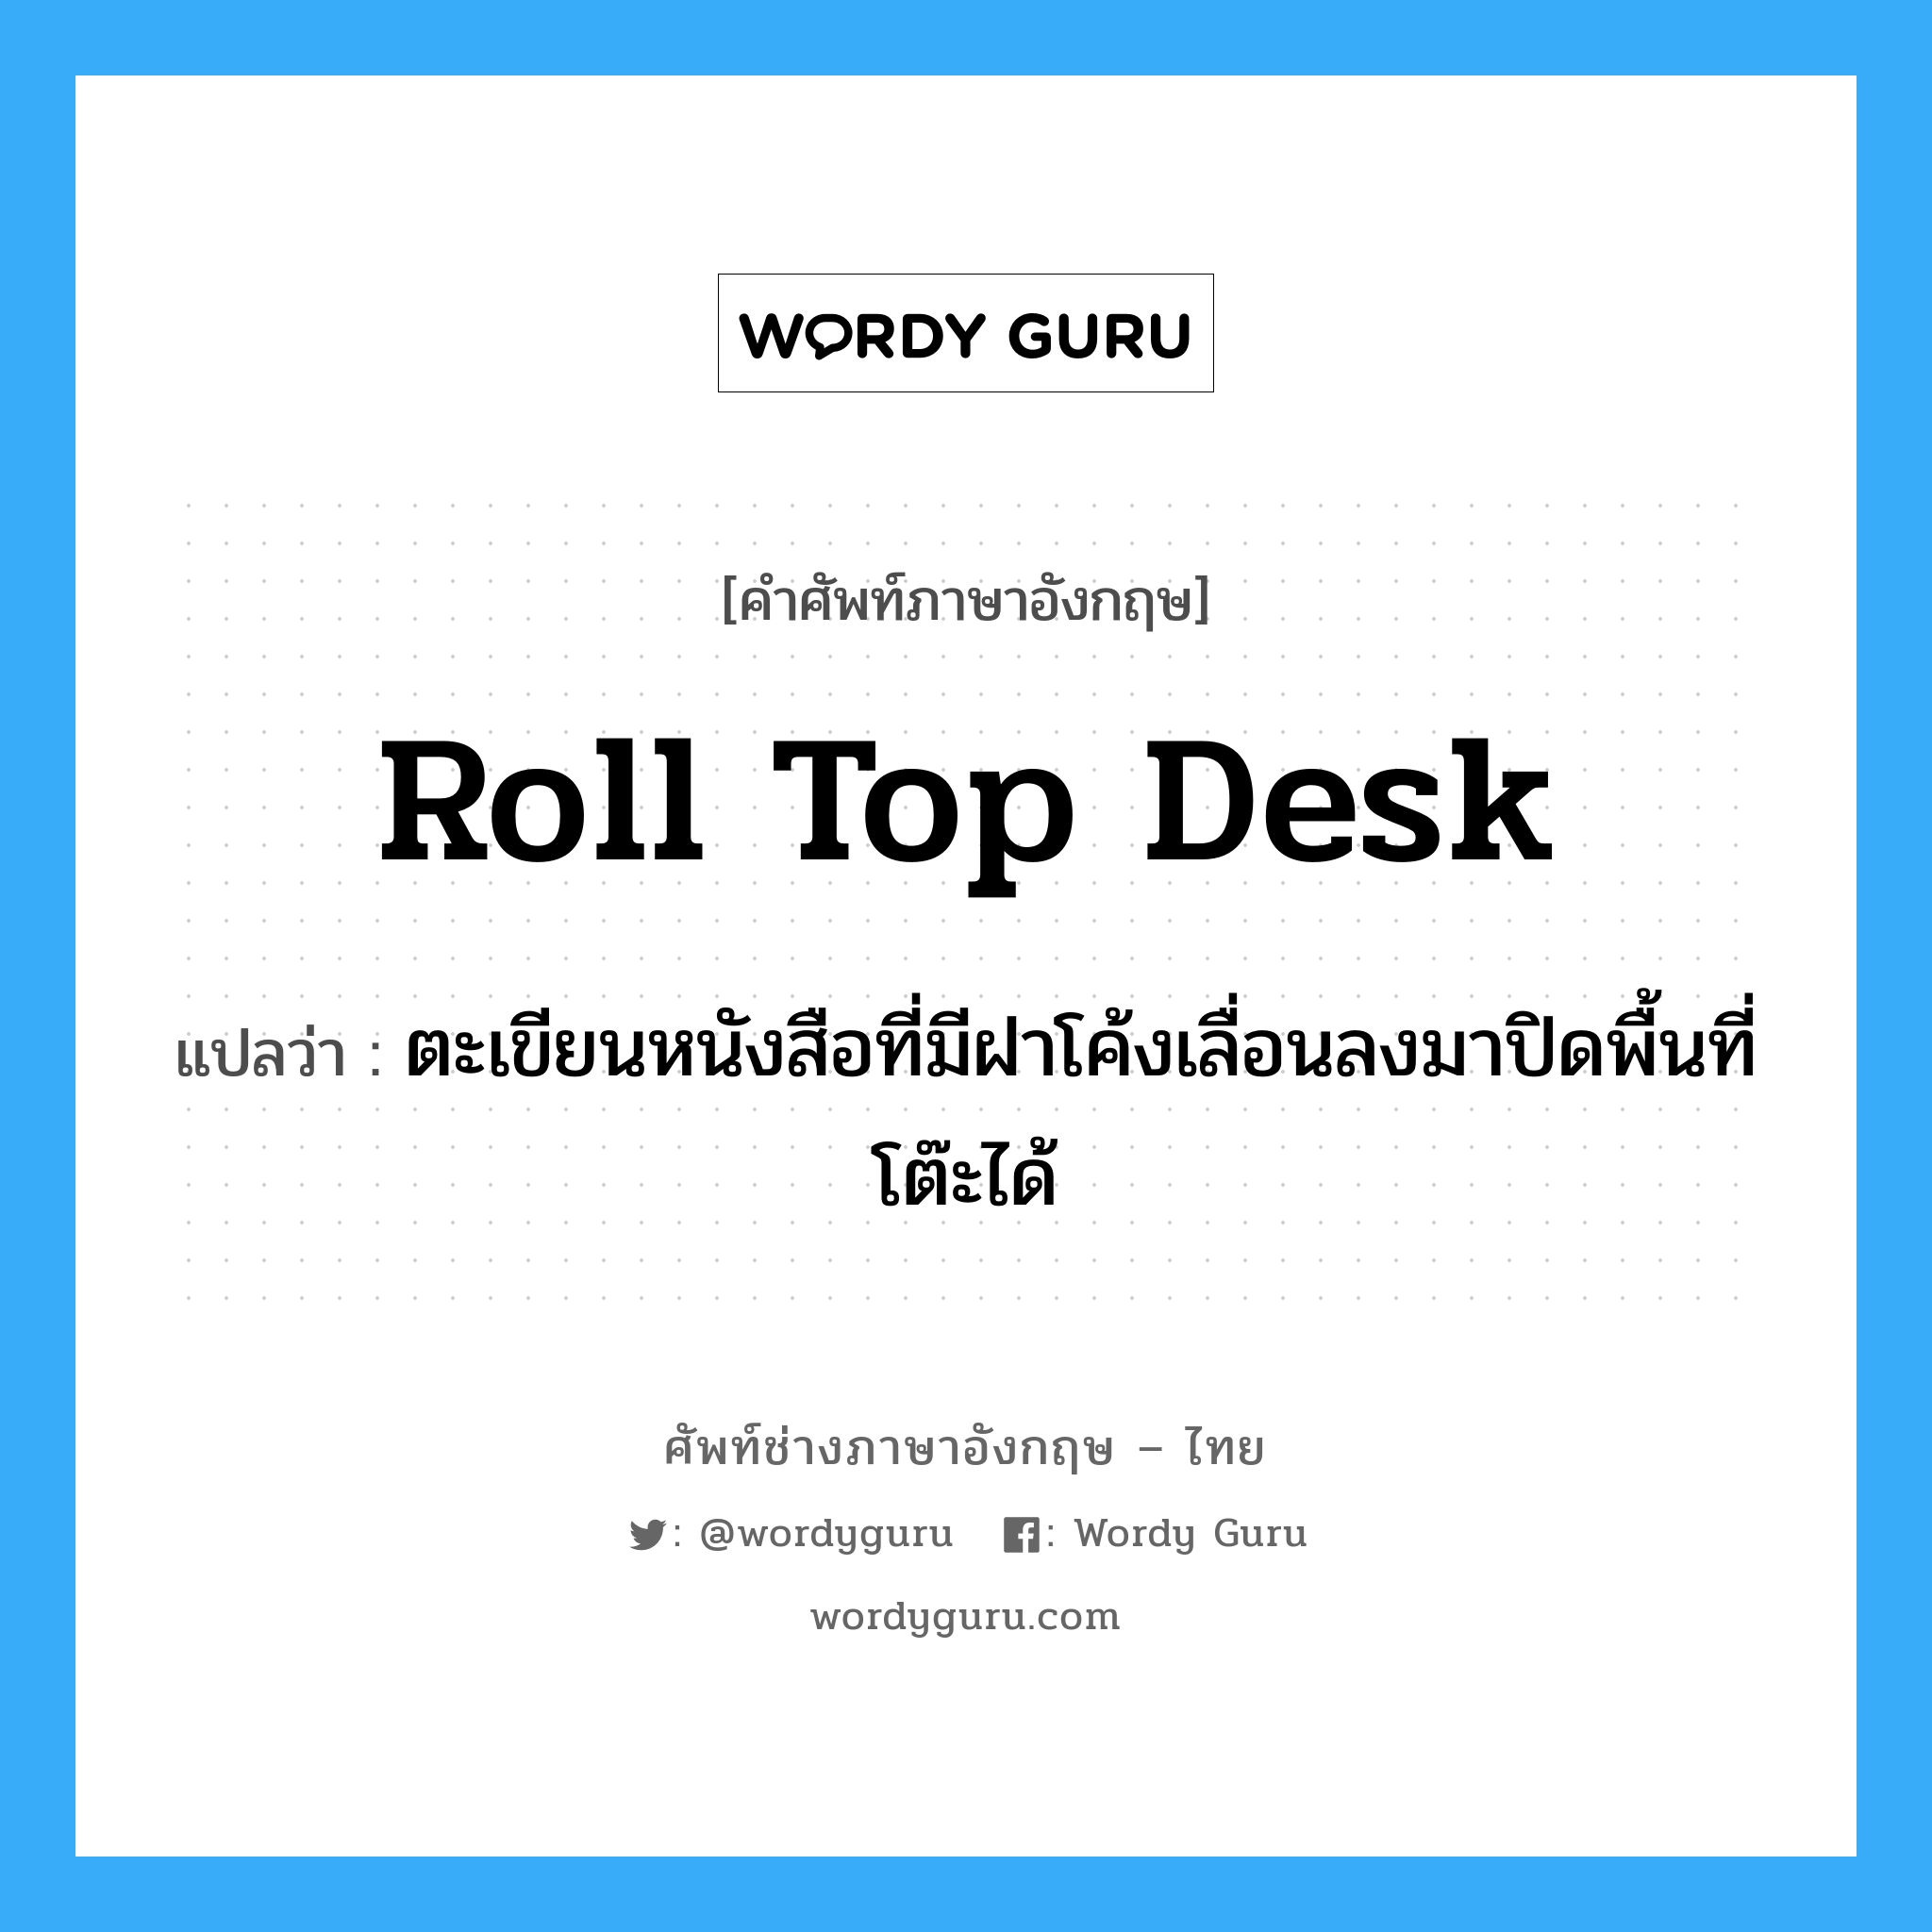 roll-top desk แปลว่า?, คำศัพท์ช่างภาษาอังกฤษ - ไทย roll top desk คำศัพท์ภาษาอังกฤษ roll top desk แปลว่า ตะเขียนหนังสือที่มีฝาโค้งเลื่อนลงมาปิดพื้นที่โต๊ะได้